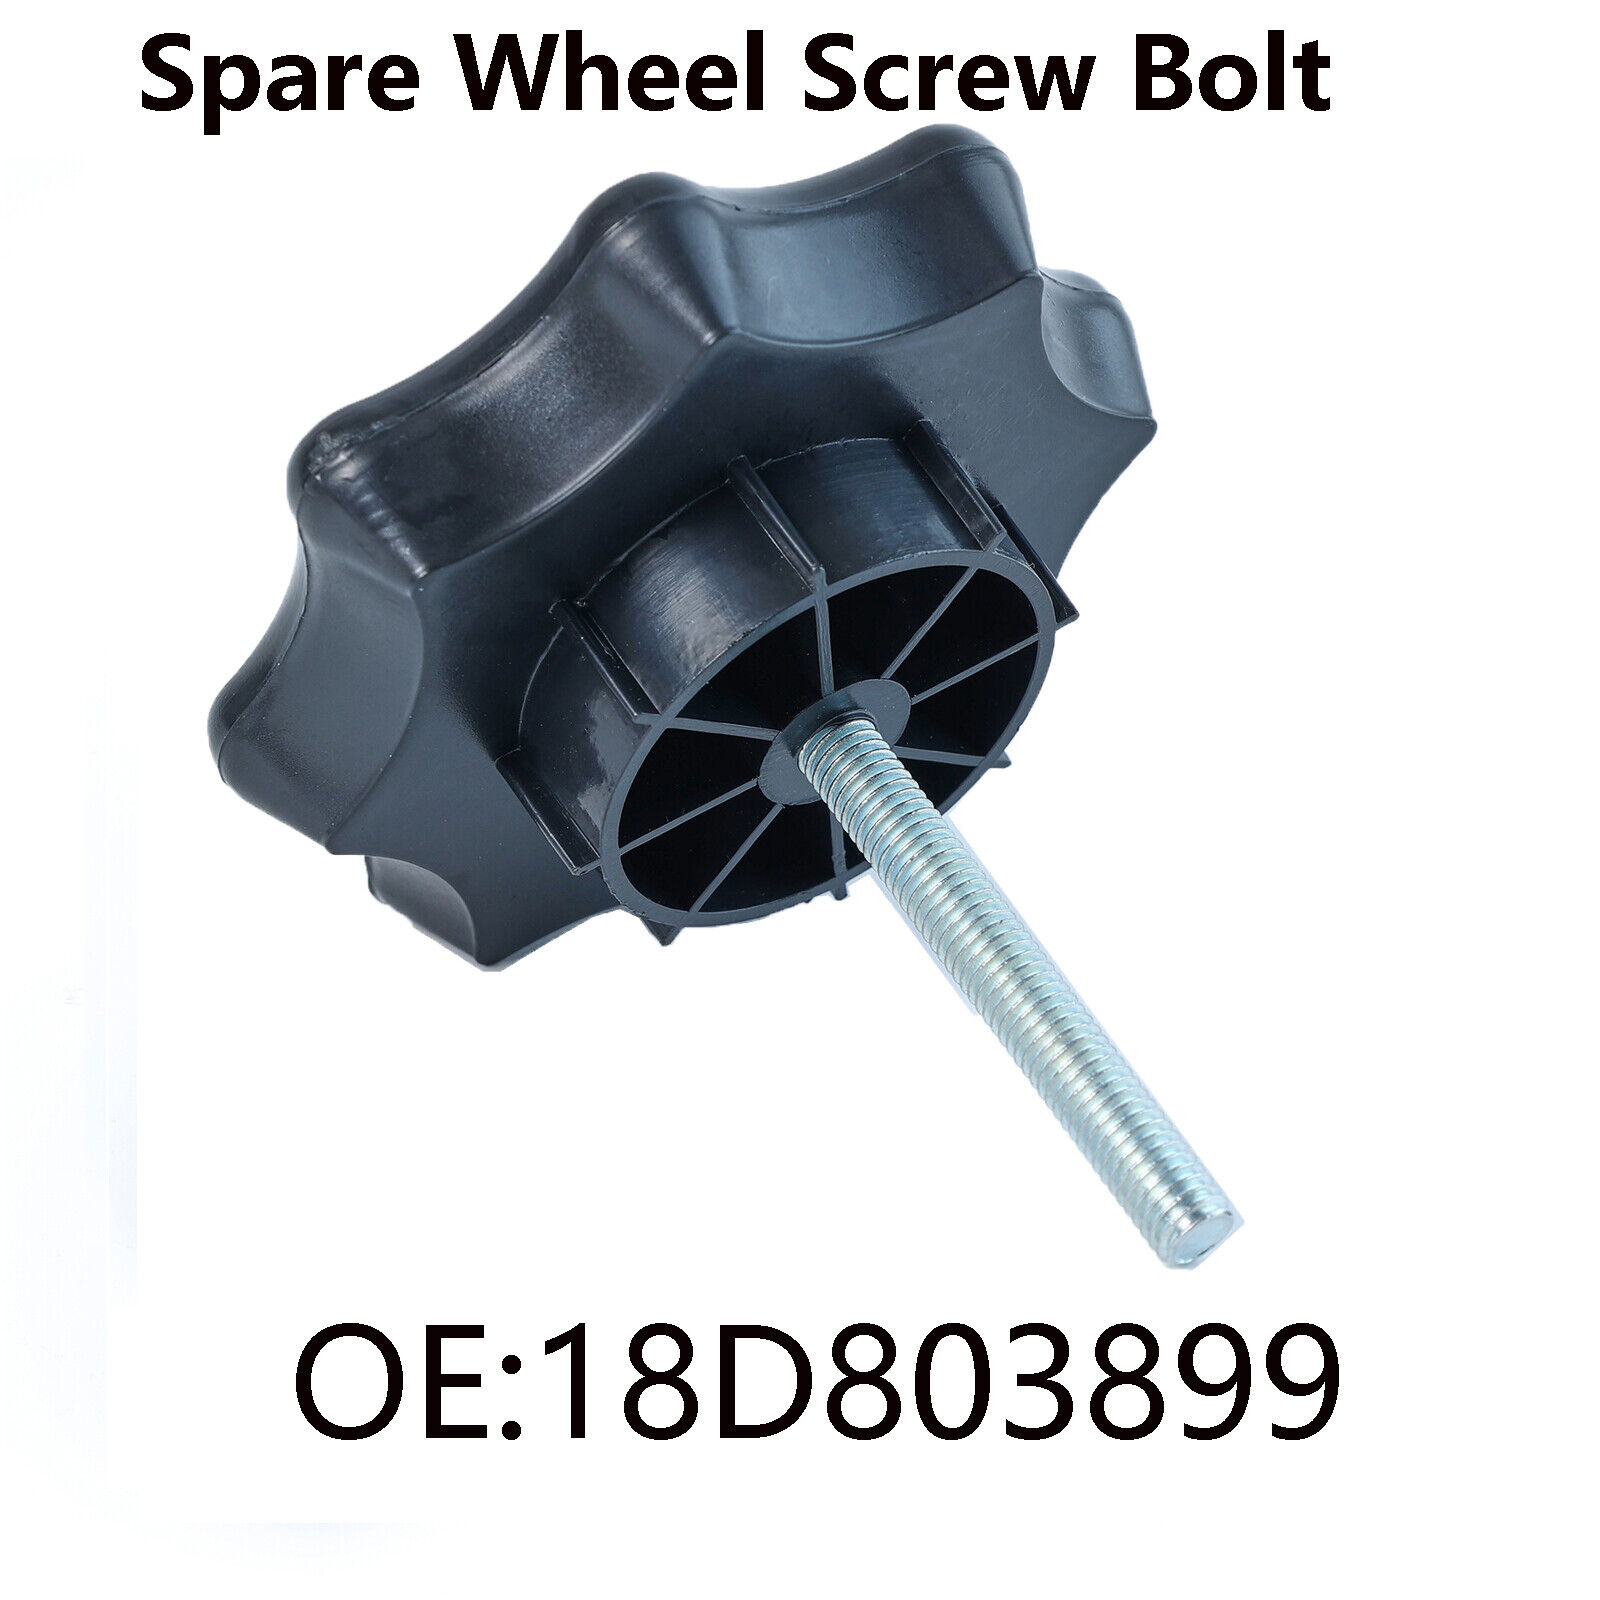 For Skoda Octavia Fabia Spare Tire Wheel Mounting Screw Bolt Retainer 18D803899